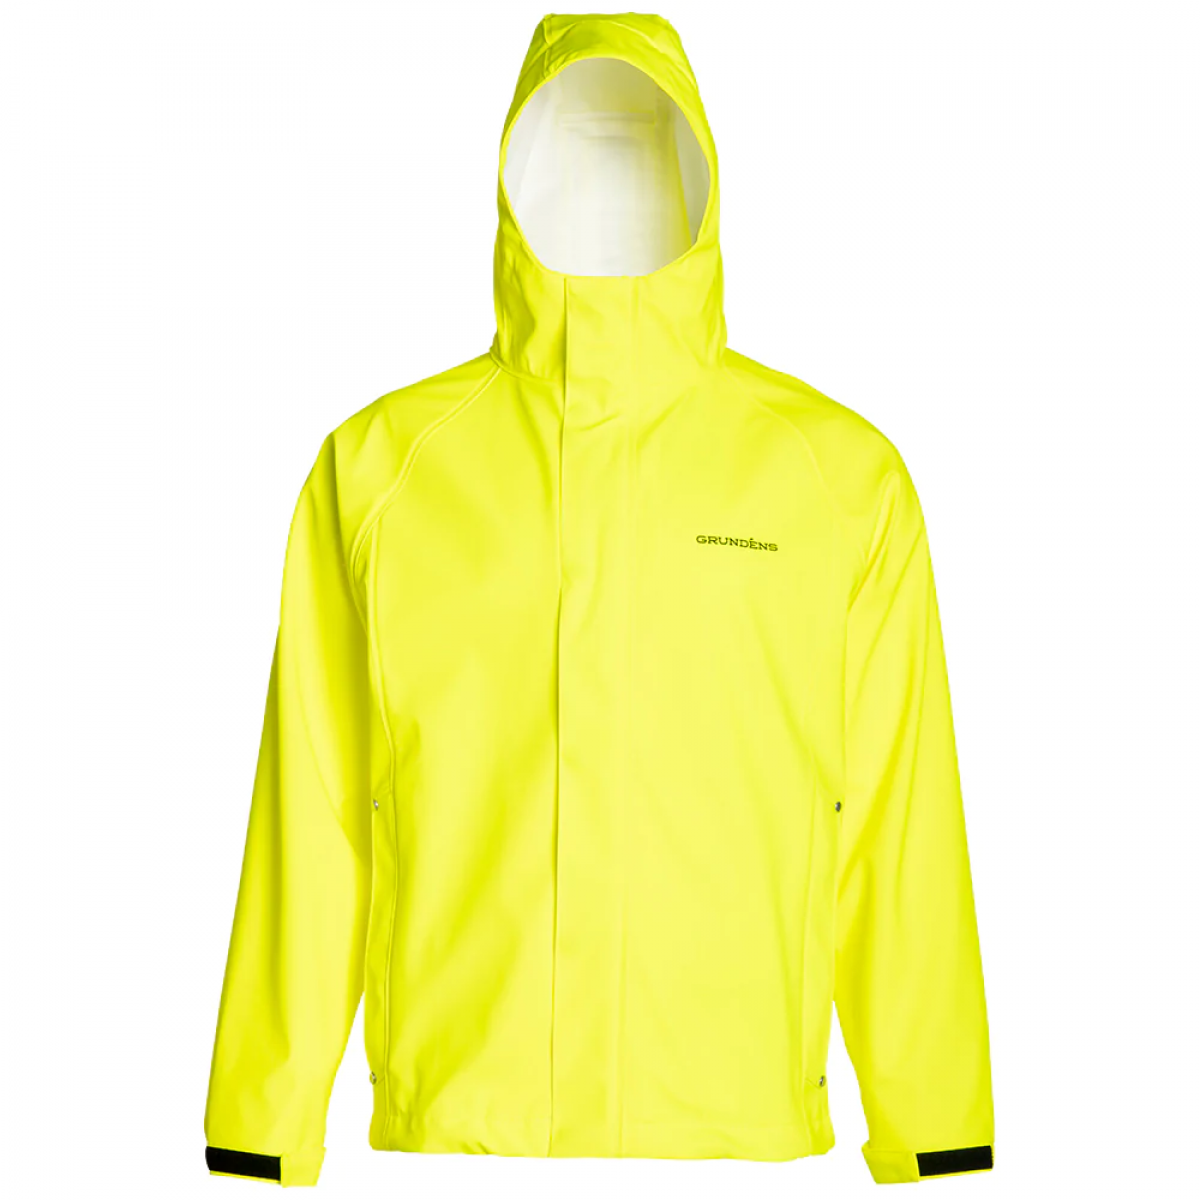 Grundens Neptune 319 Commercial Fishing Jacket Yellow Size 3XL - 10079